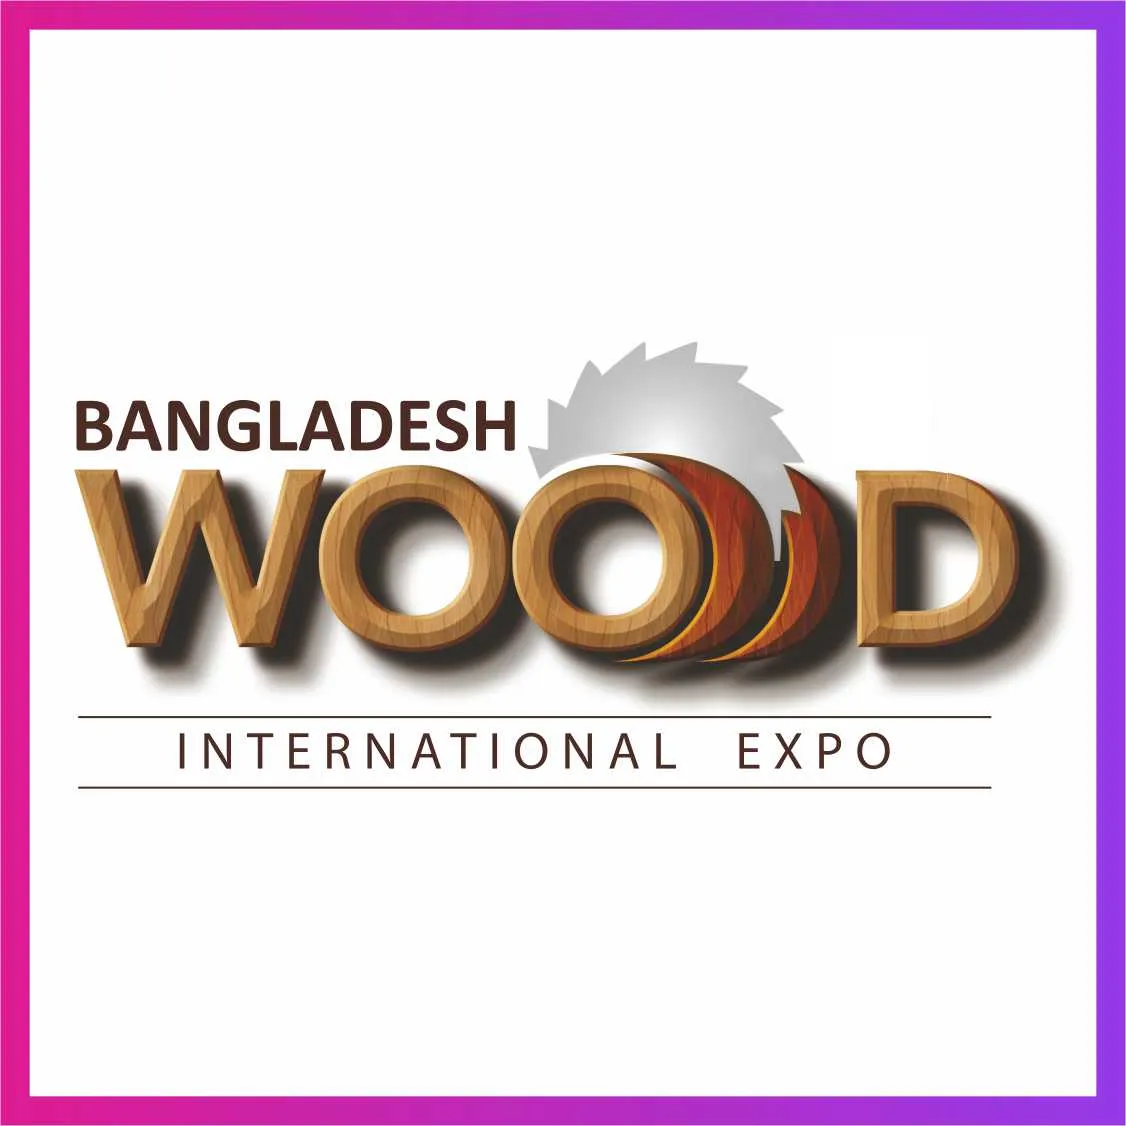 Bangladesh Wood International EXPO 2016